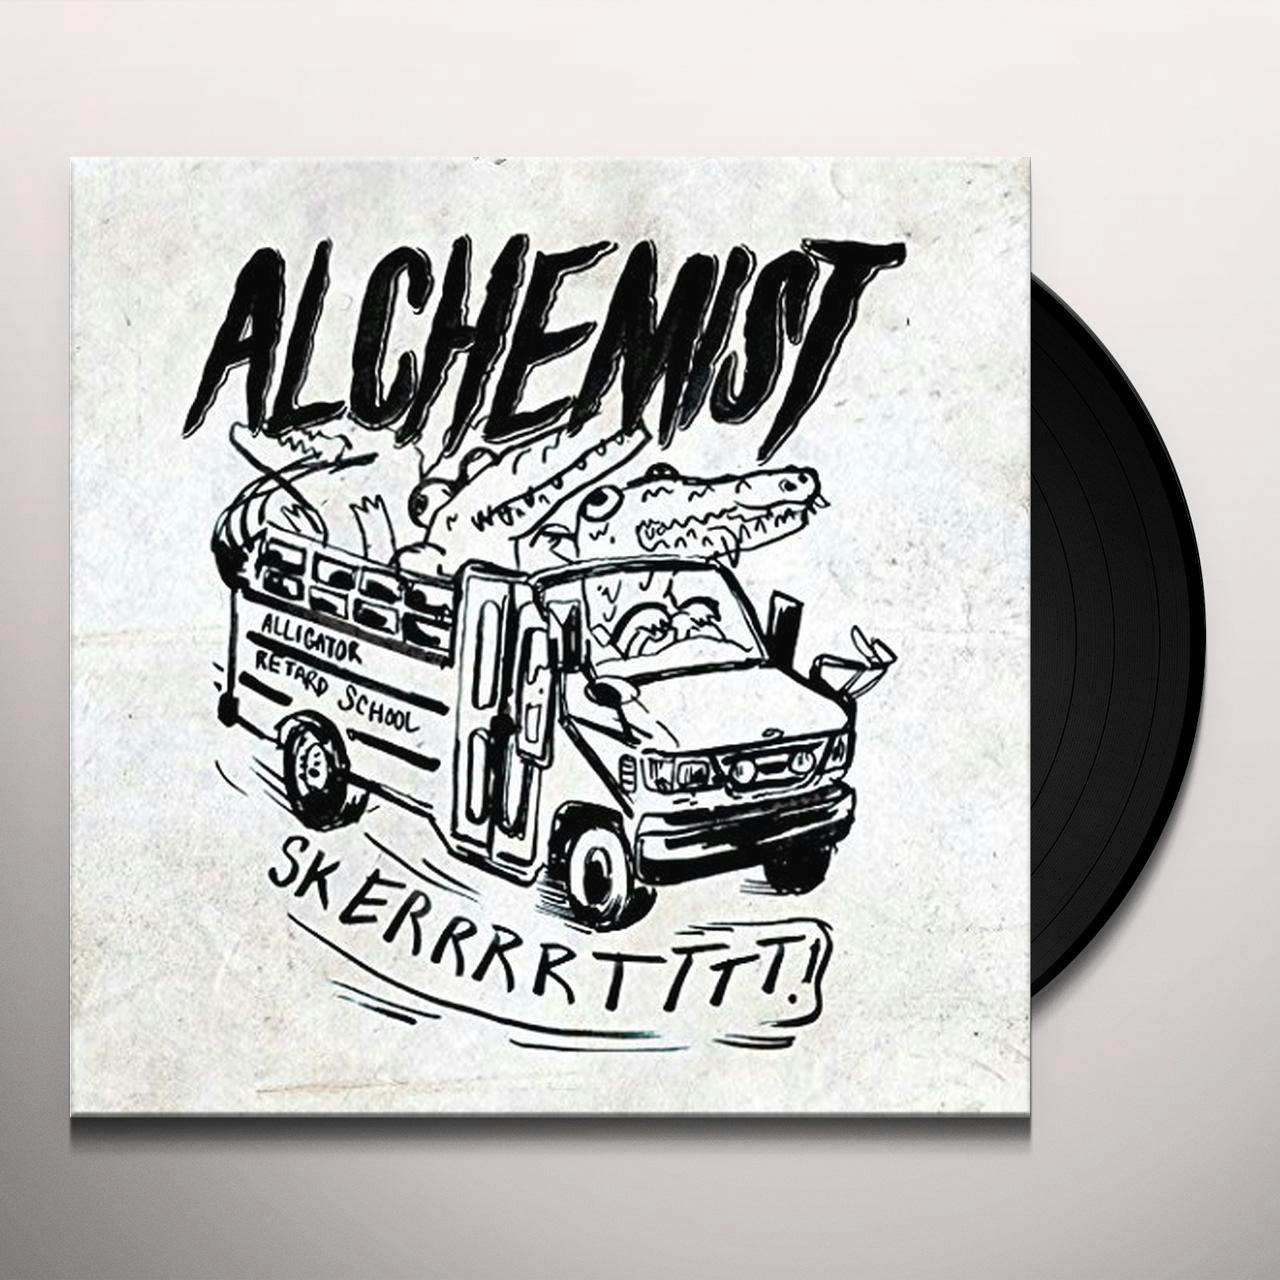 Alchemist – Retarded Alligator Beats LP